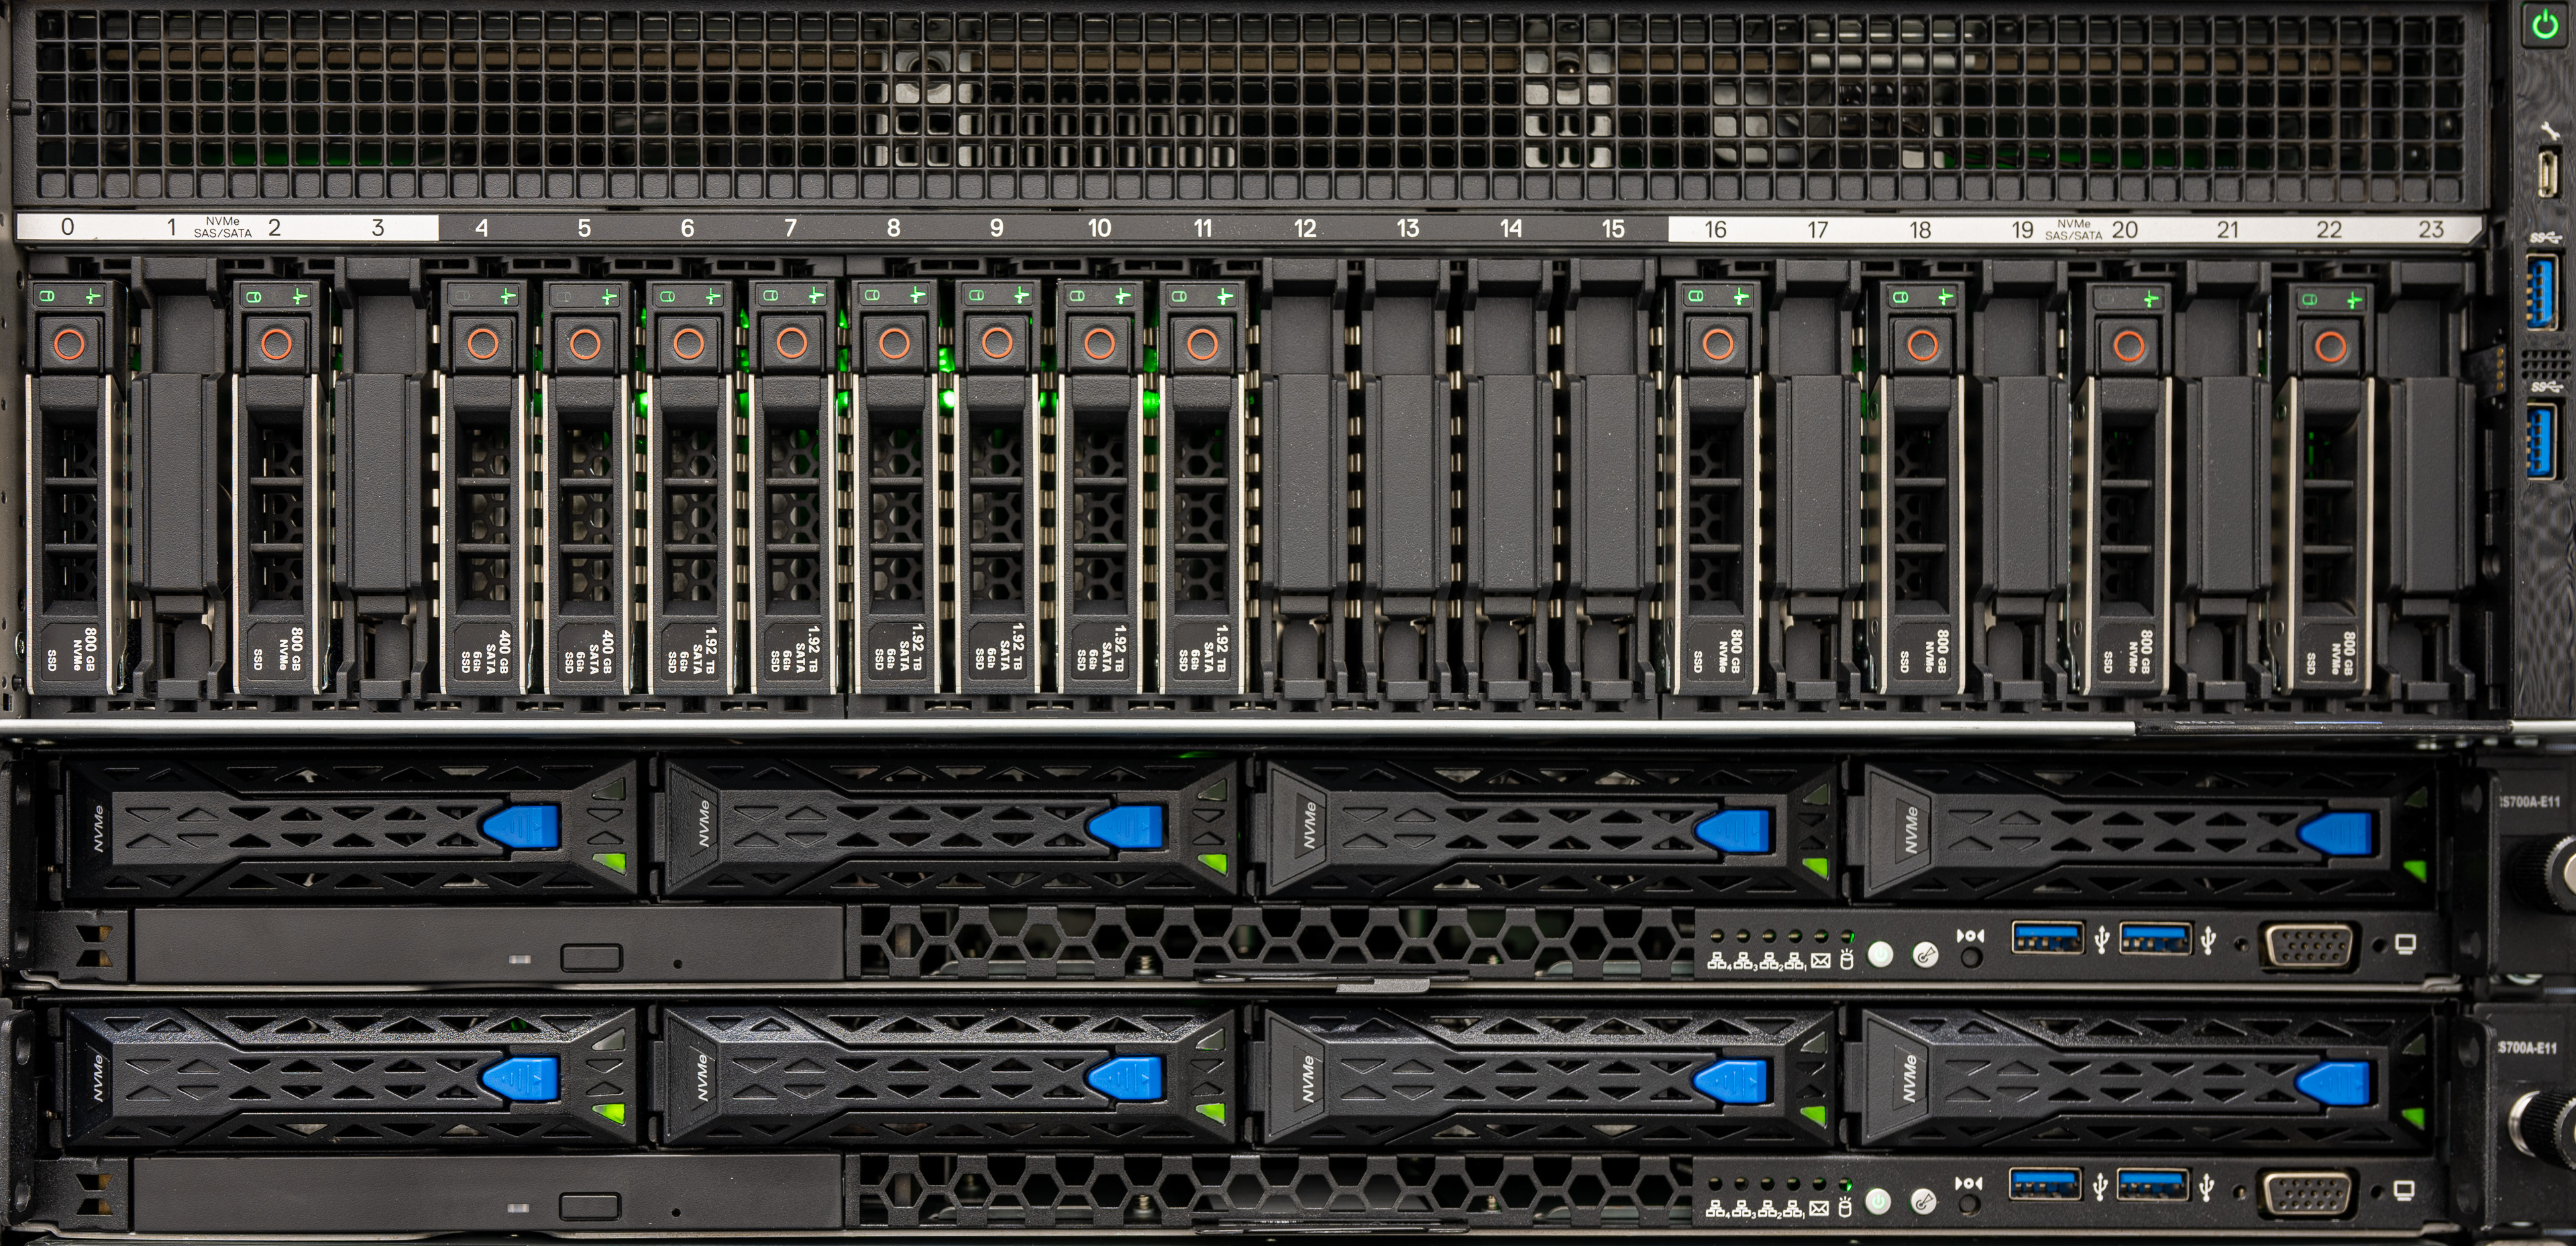 Previous database server